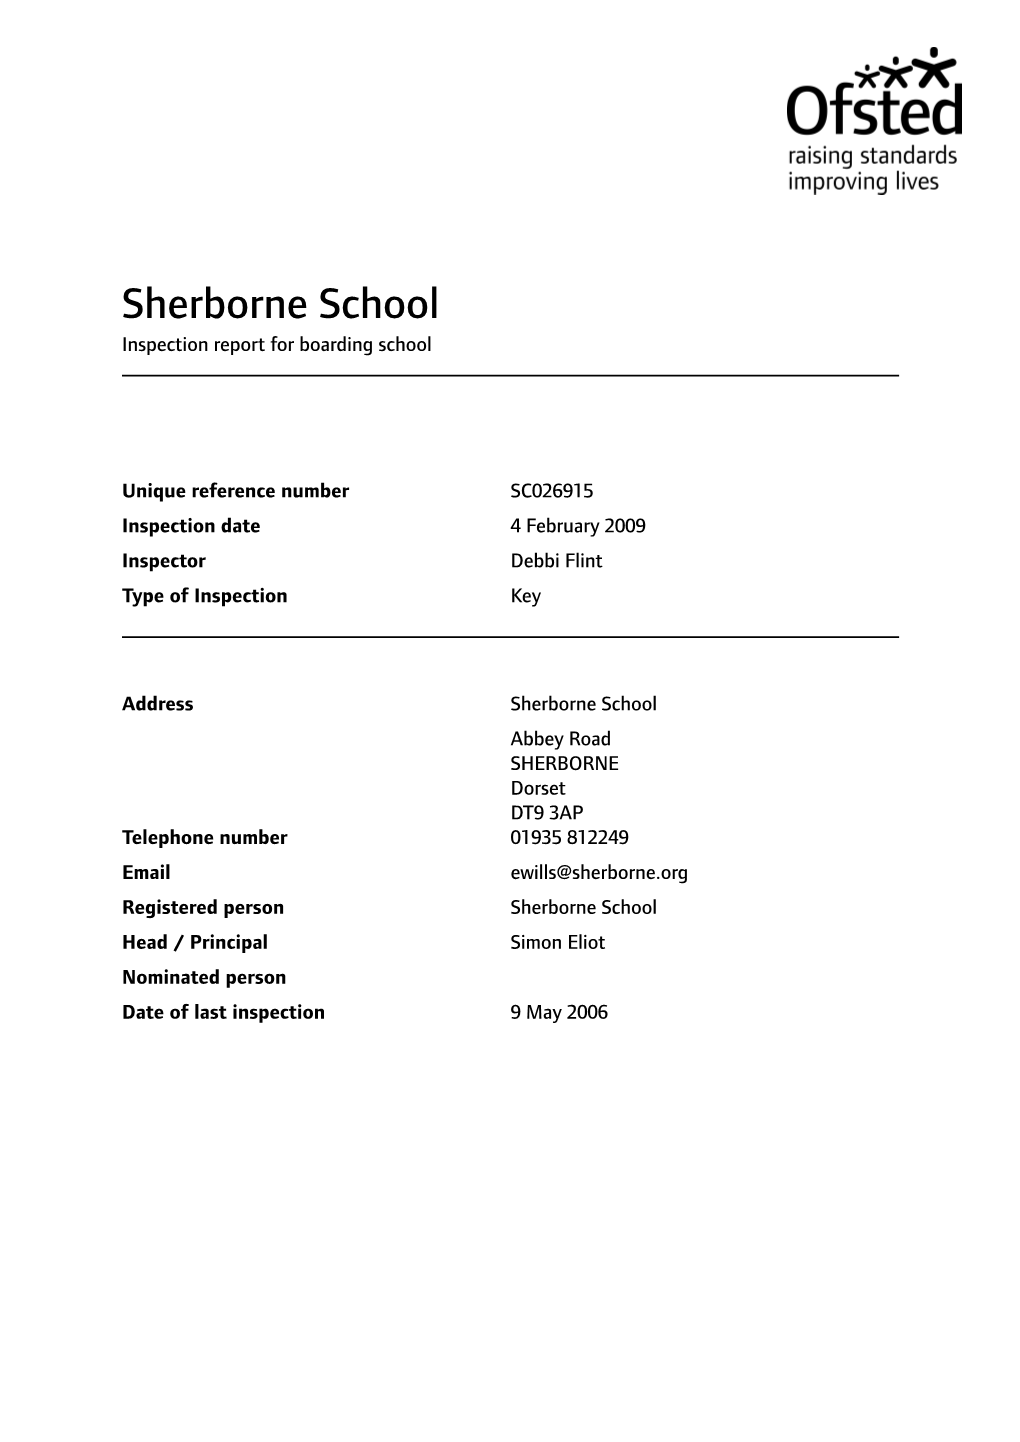 Sherborne School Inspection Report for Boarding School